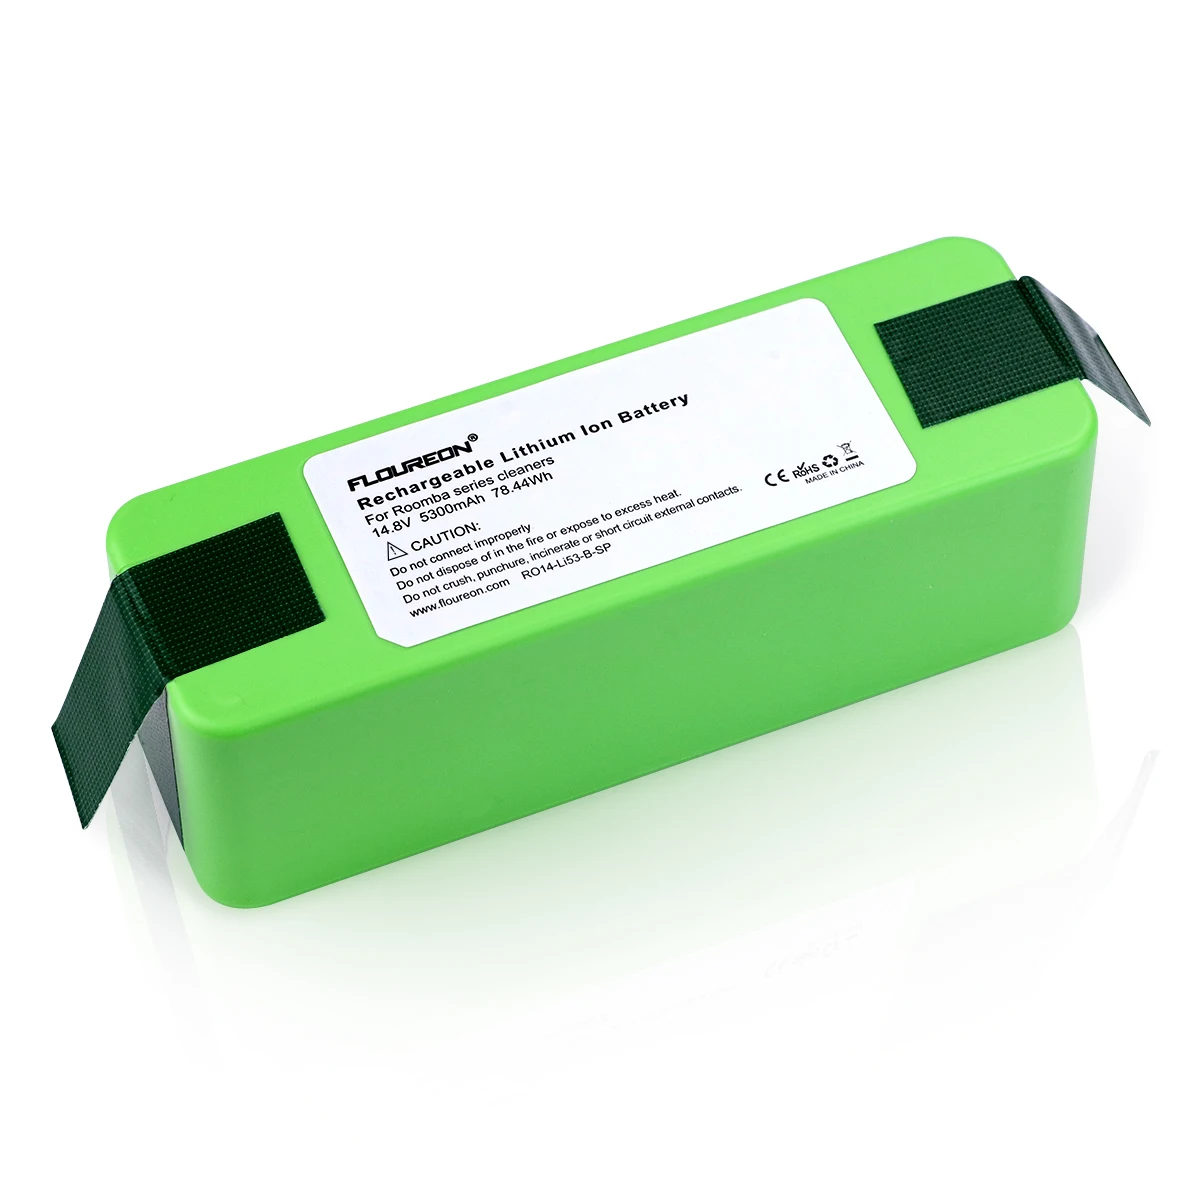 Floureon 14,8 V 5300 mAh Li-Ion Батарея совместимый для iRobot Roomba 500 600 700 серии 800 зеленый цвет